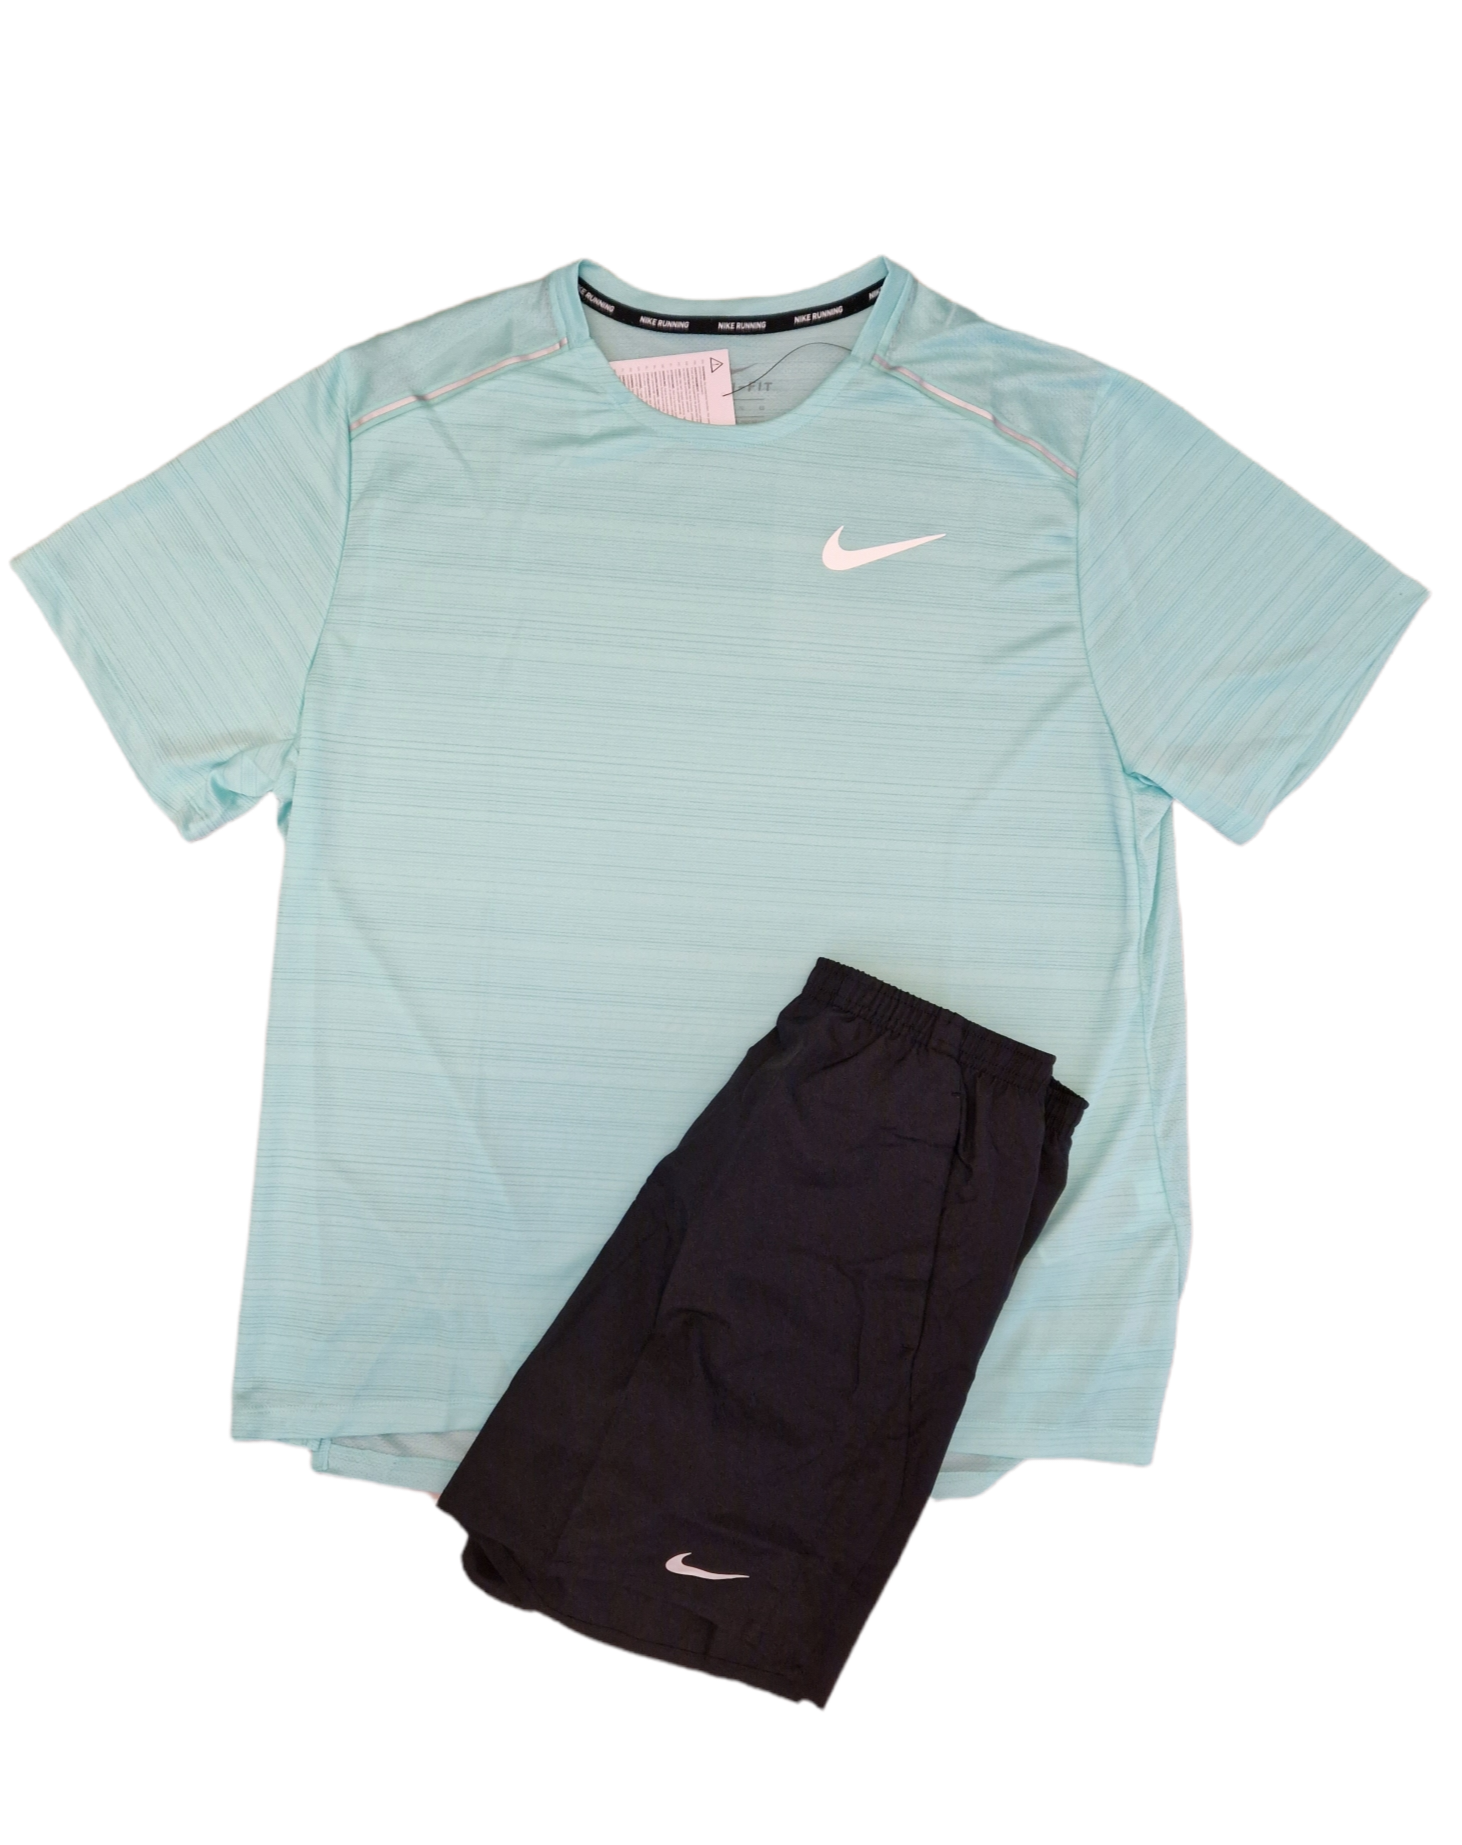 Nike Dri Fit Shorts Set Aqua/Black